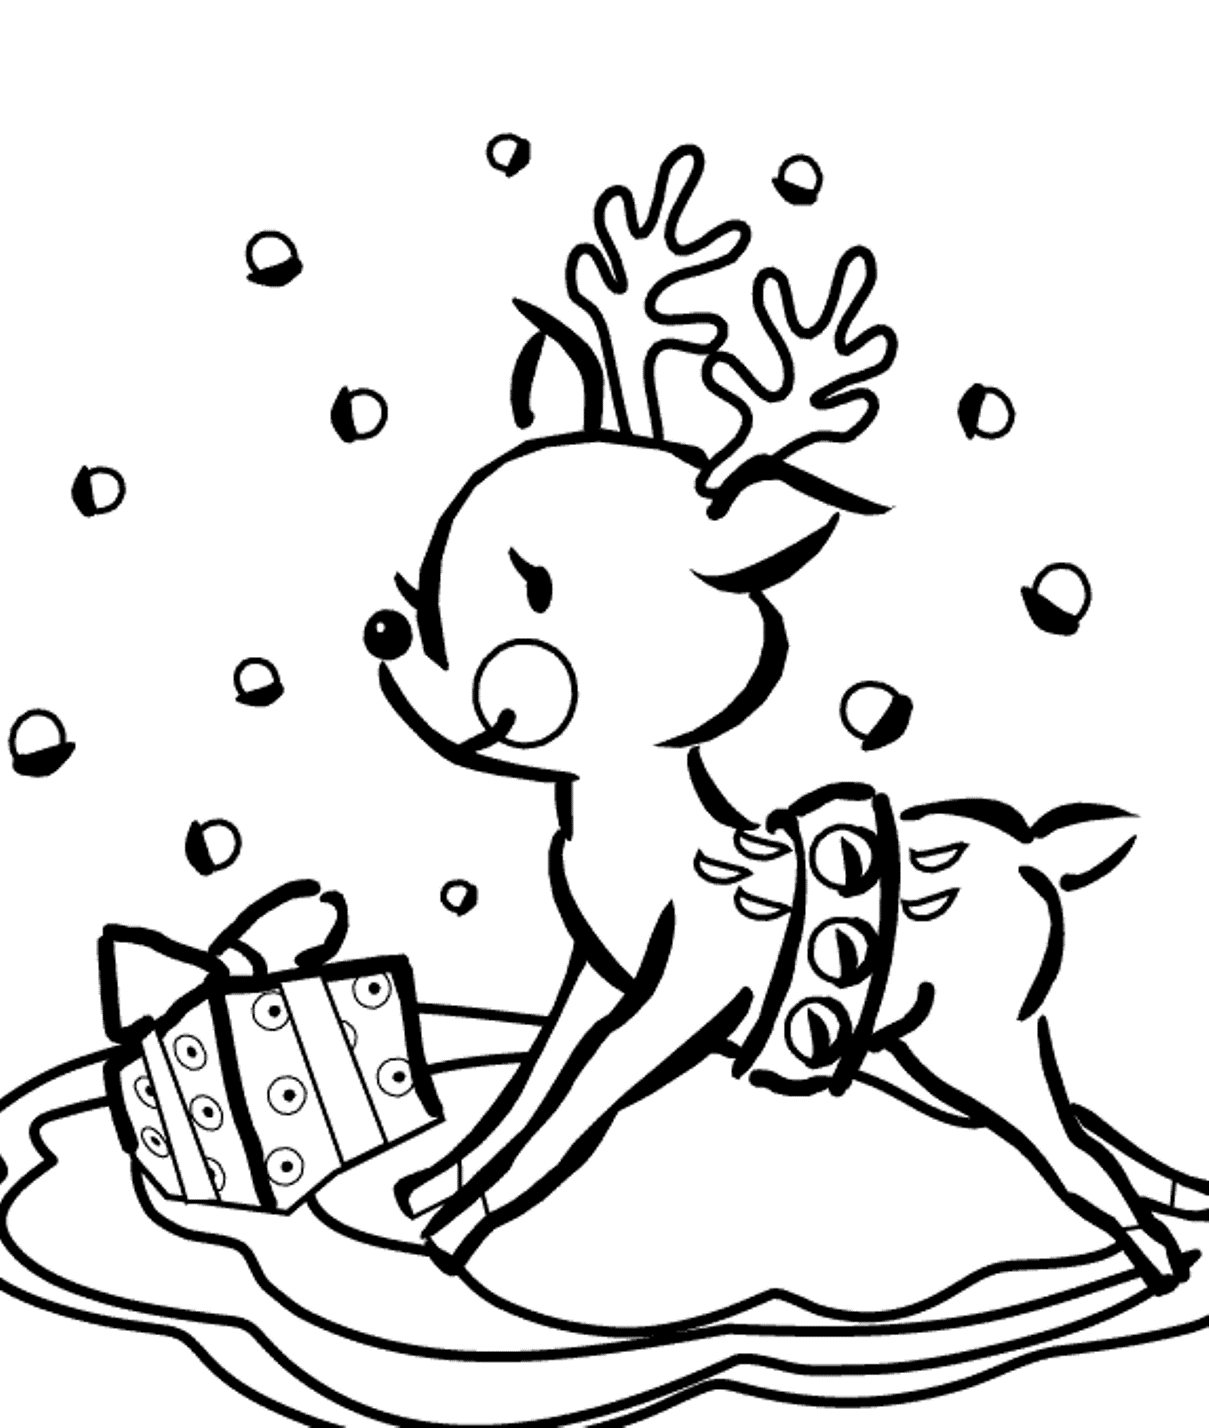 Presents And Reindeer